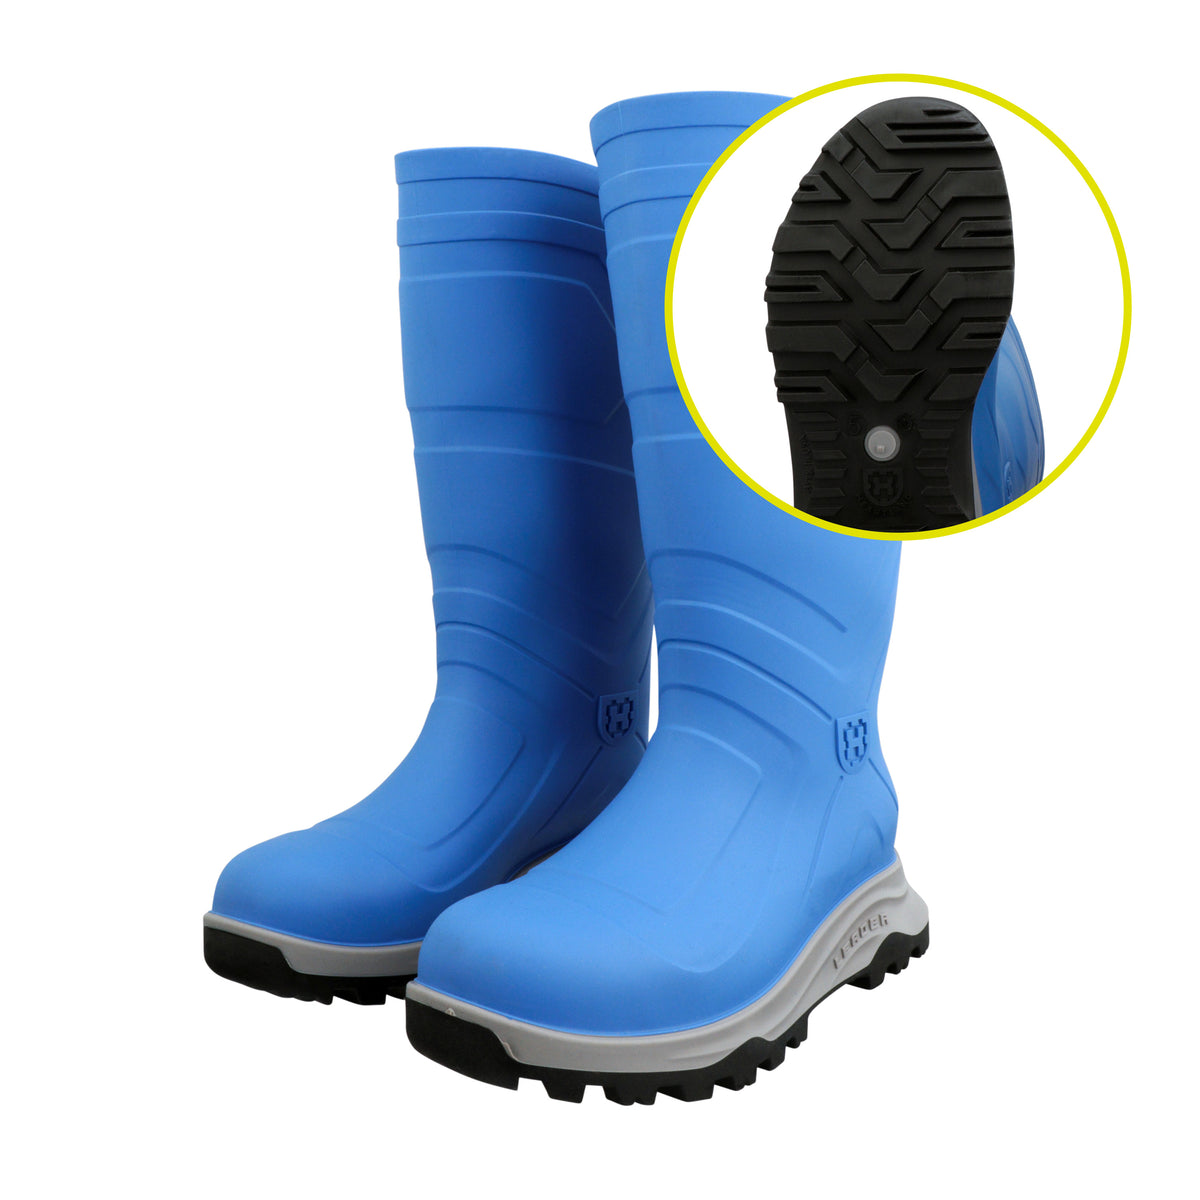 Leader Boot SE – Heartland Footwear